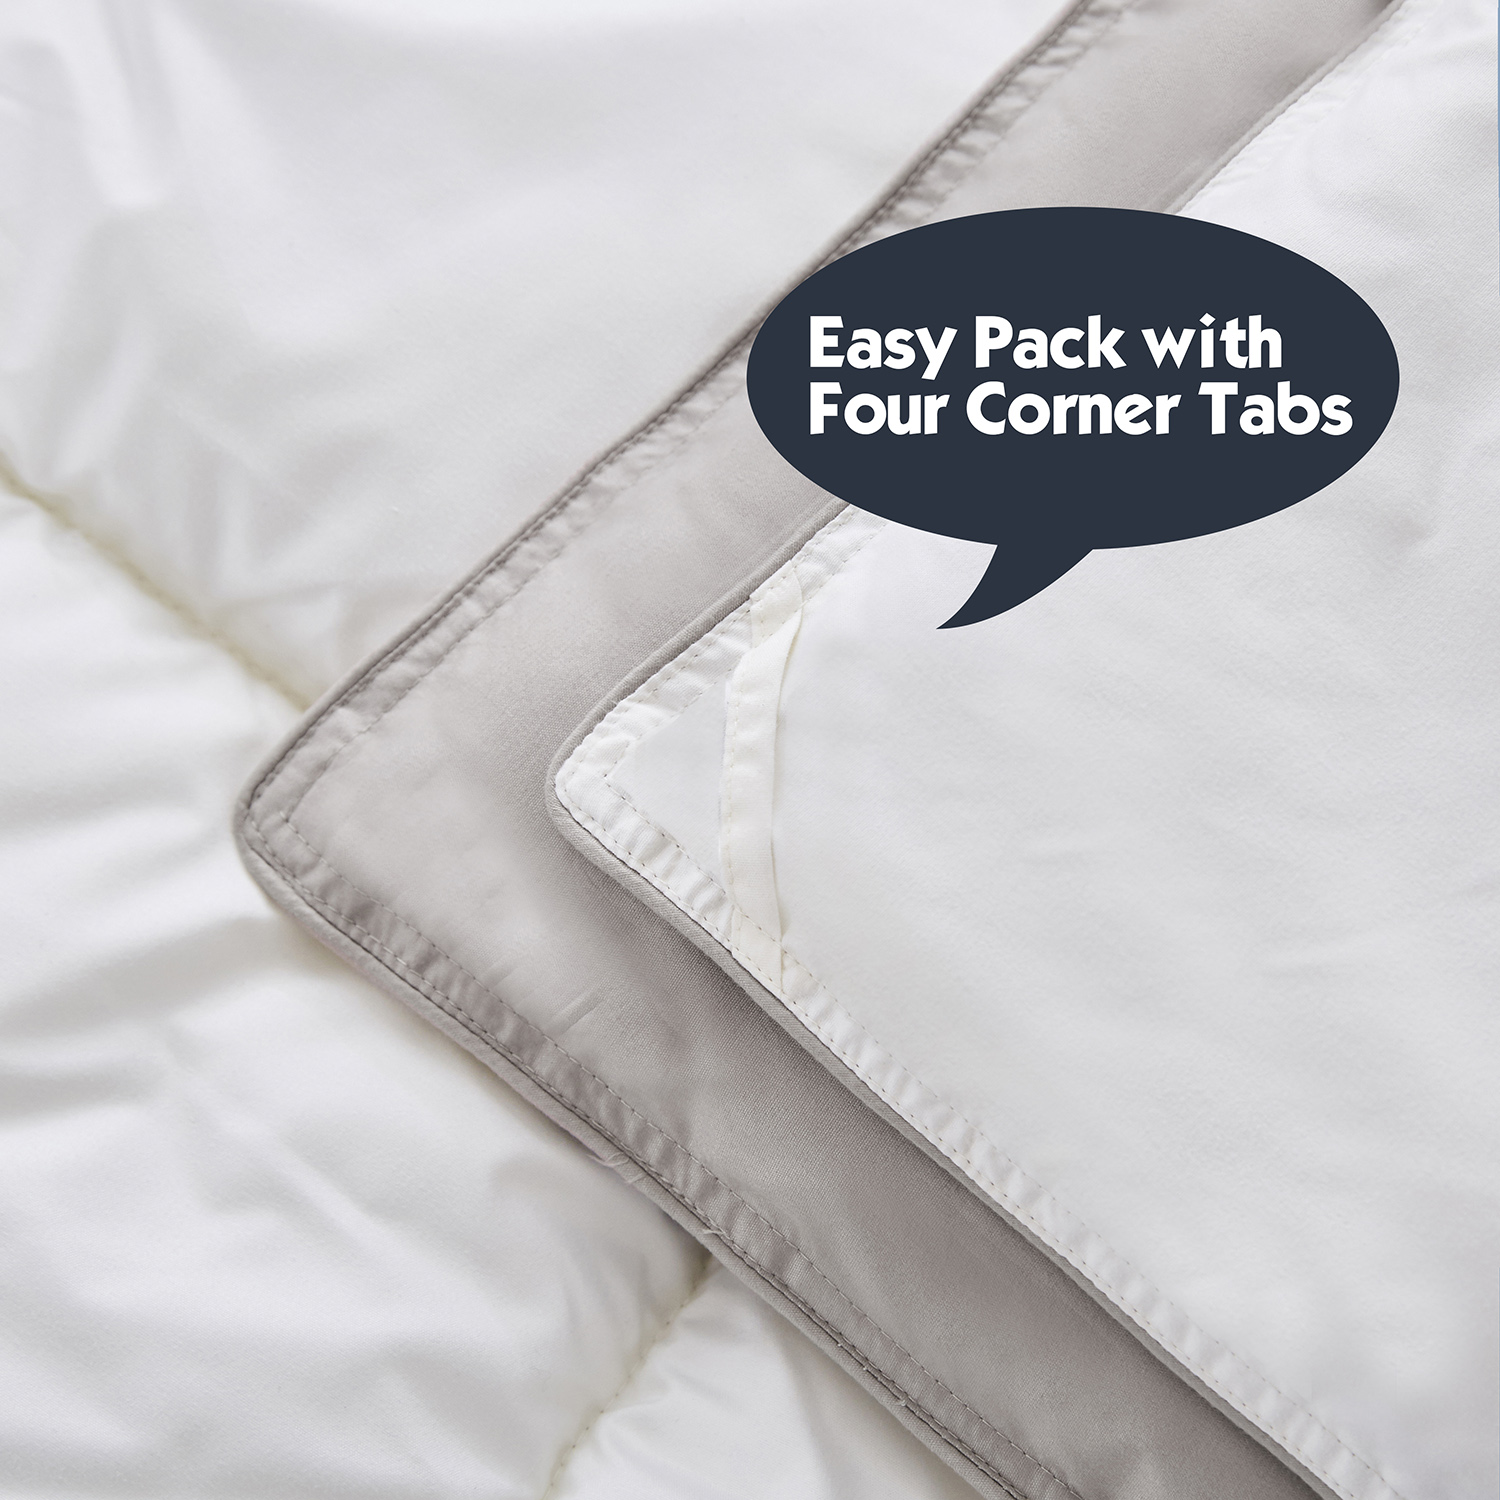 HIG 3pc All Season Lightweight Reversible Khaki Down Alternative Comforters